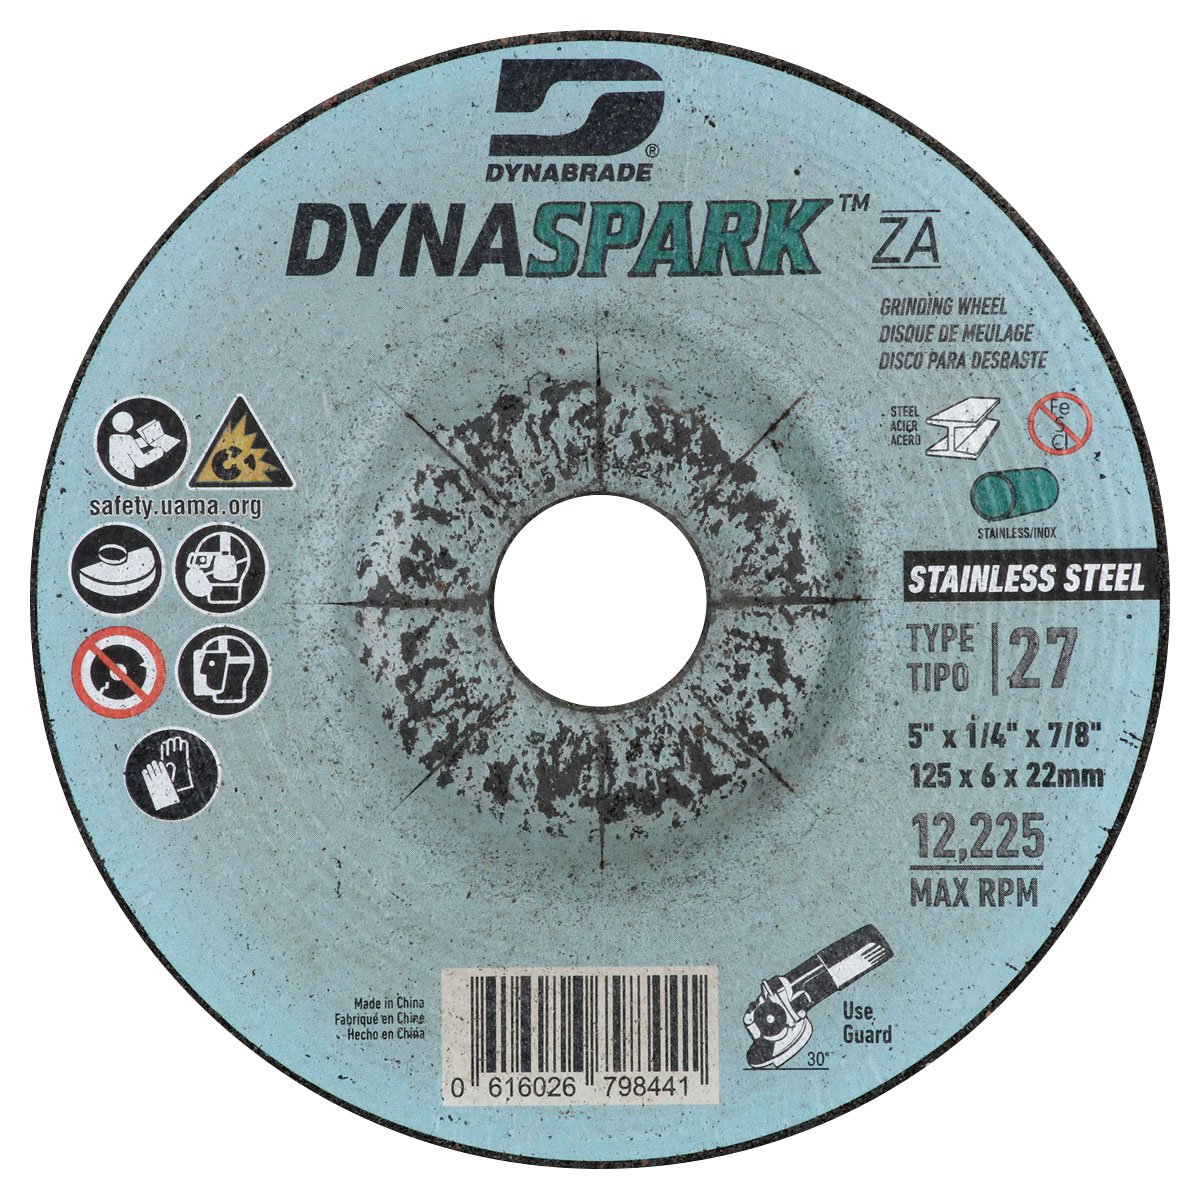 DynaSpark ZA SS 5" x 1/4" x 7/8" T27 Grinding Wheel